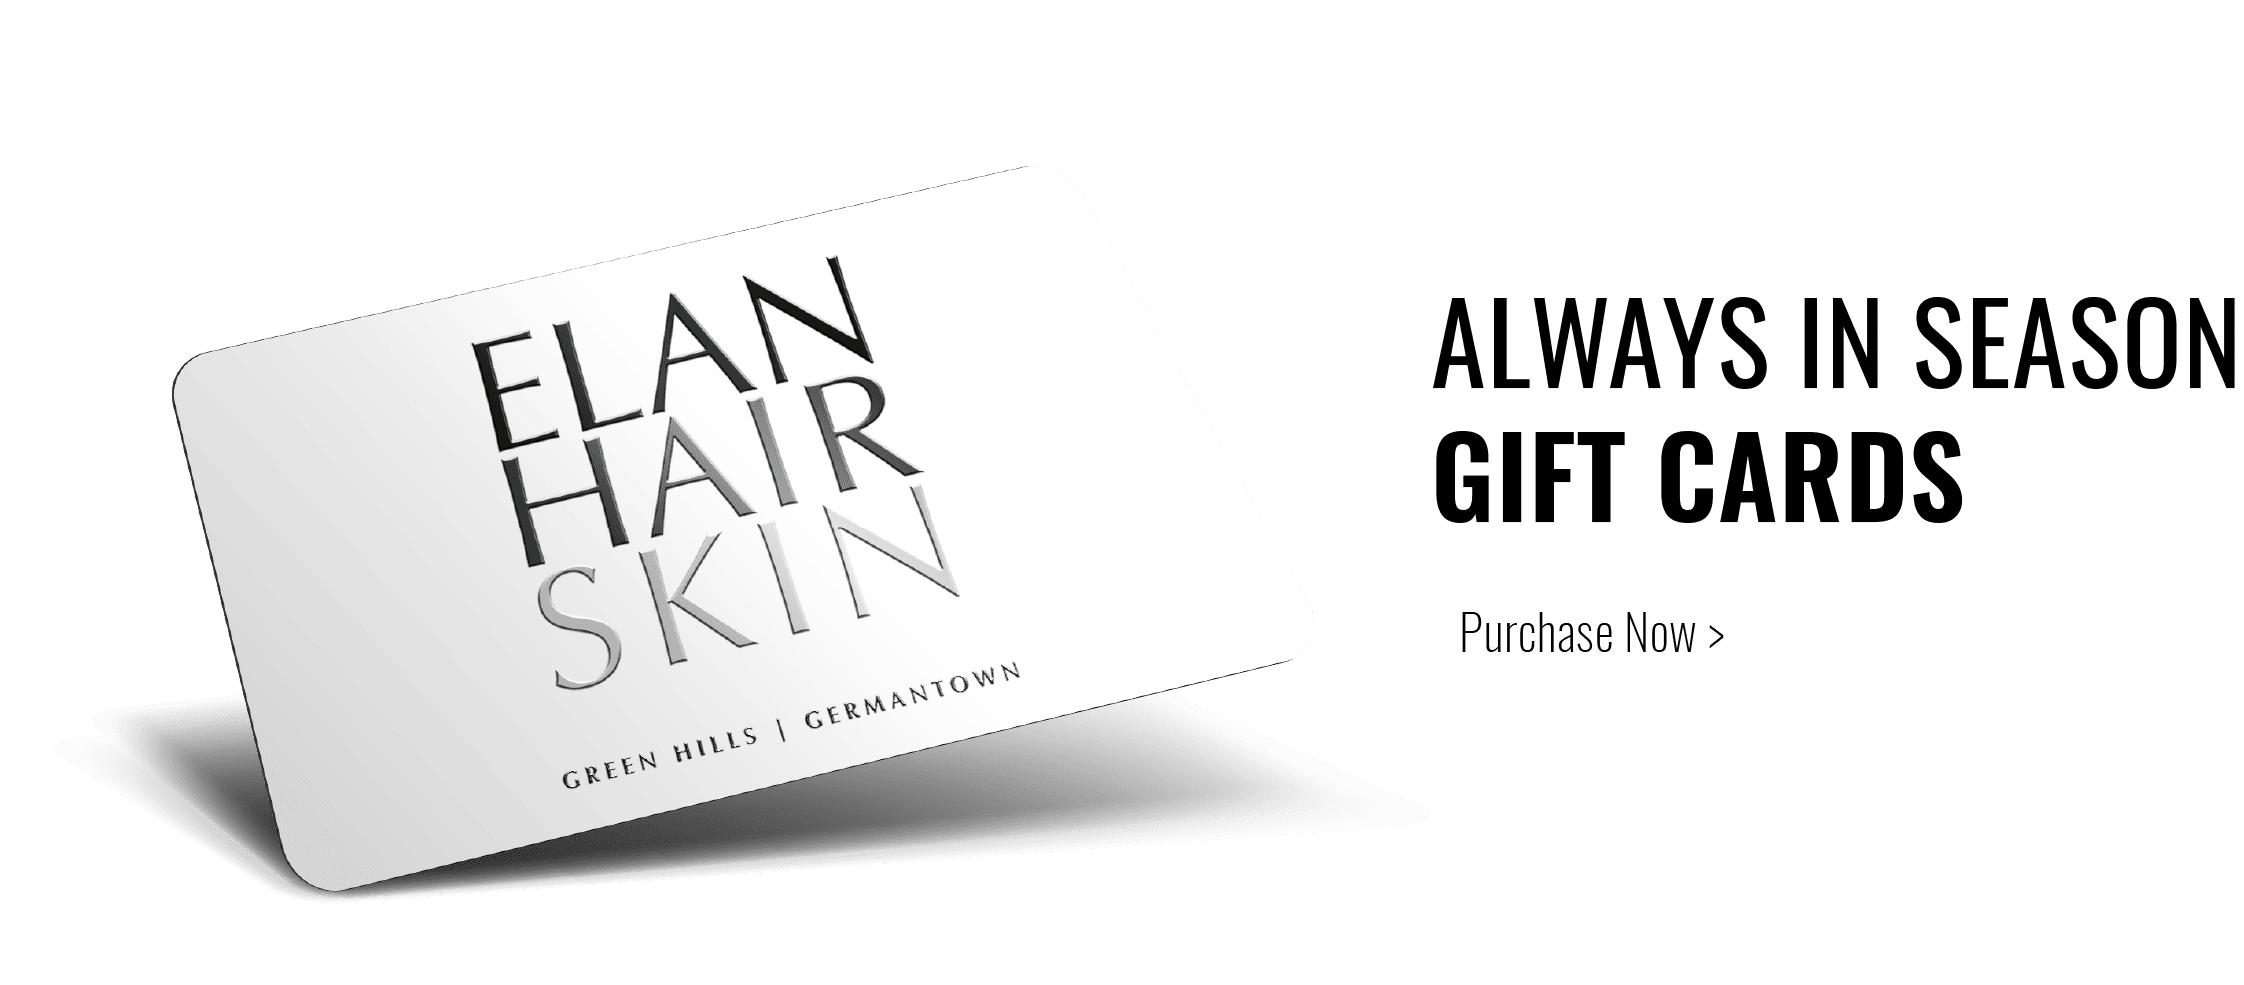 ELAN Hair & Skin Gift Cards Available